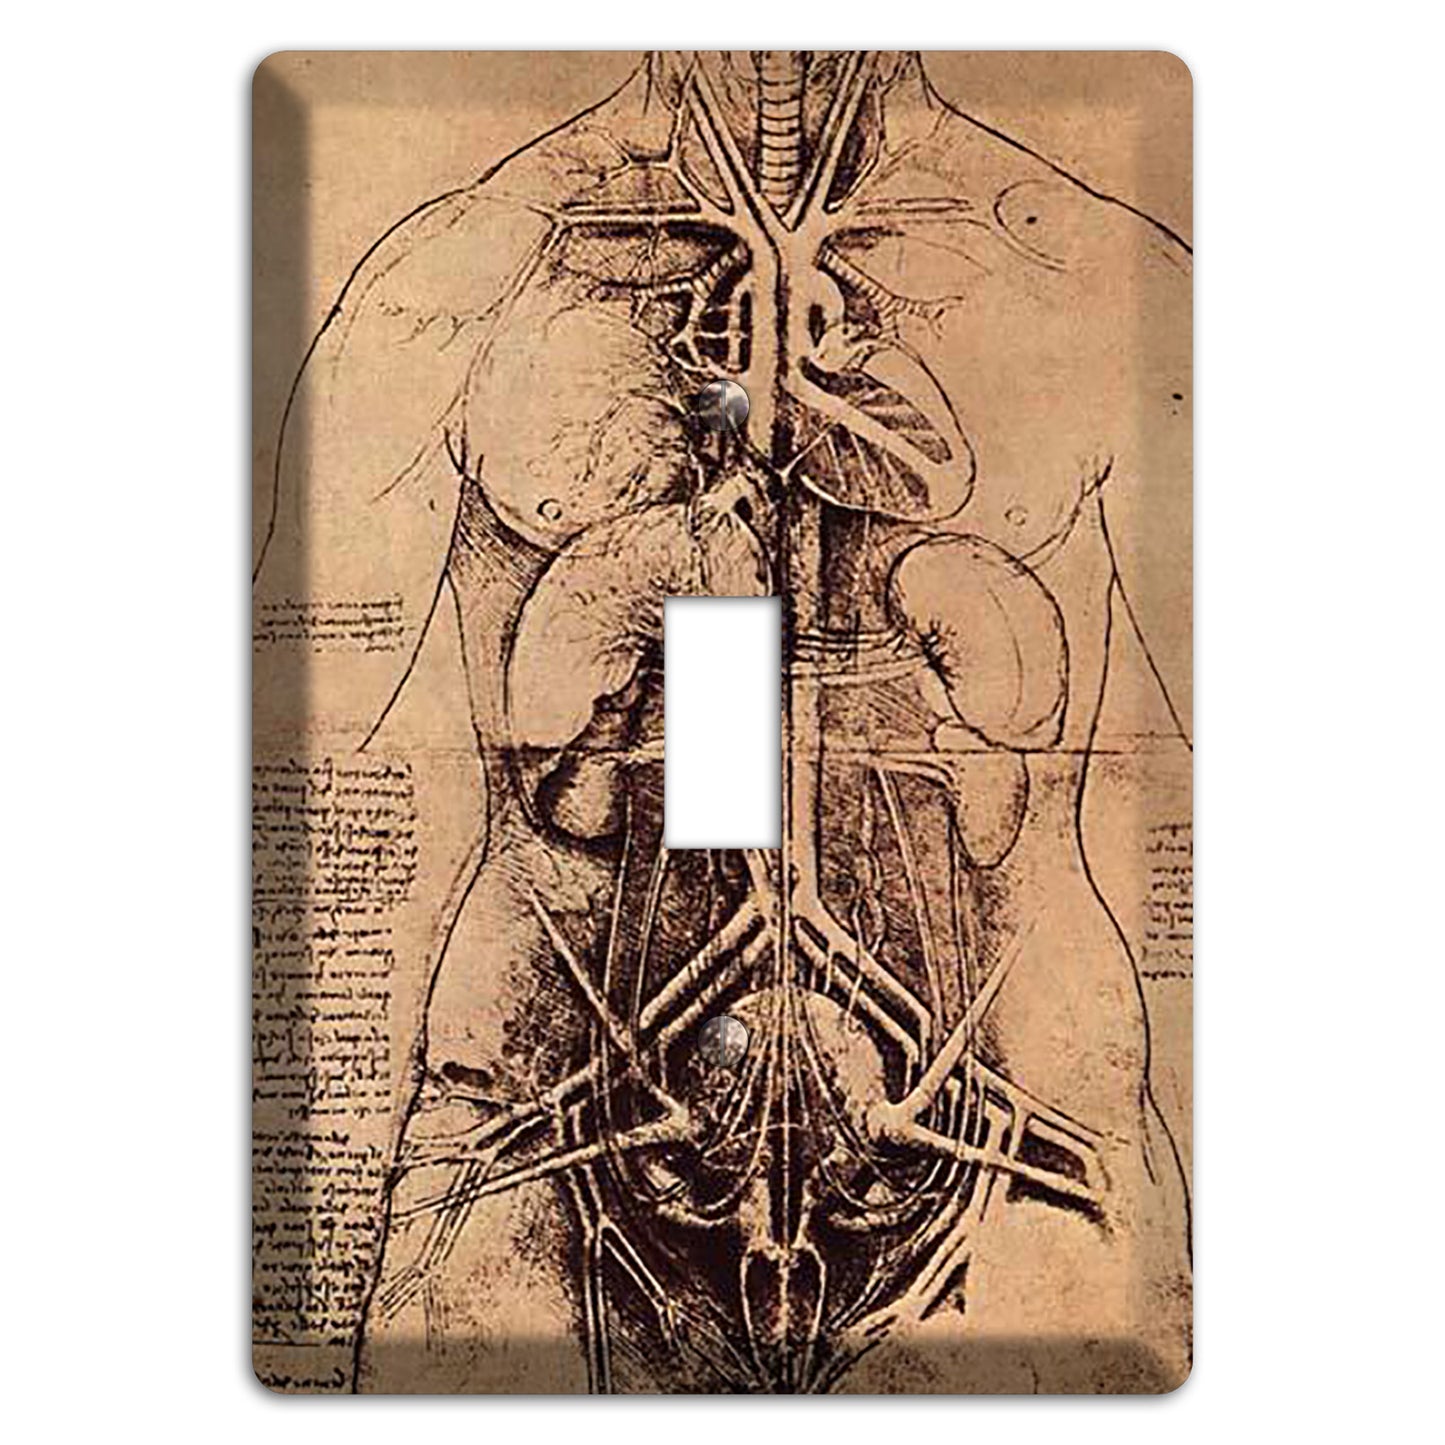 Da Vinci - Principle Organs Cover Plates